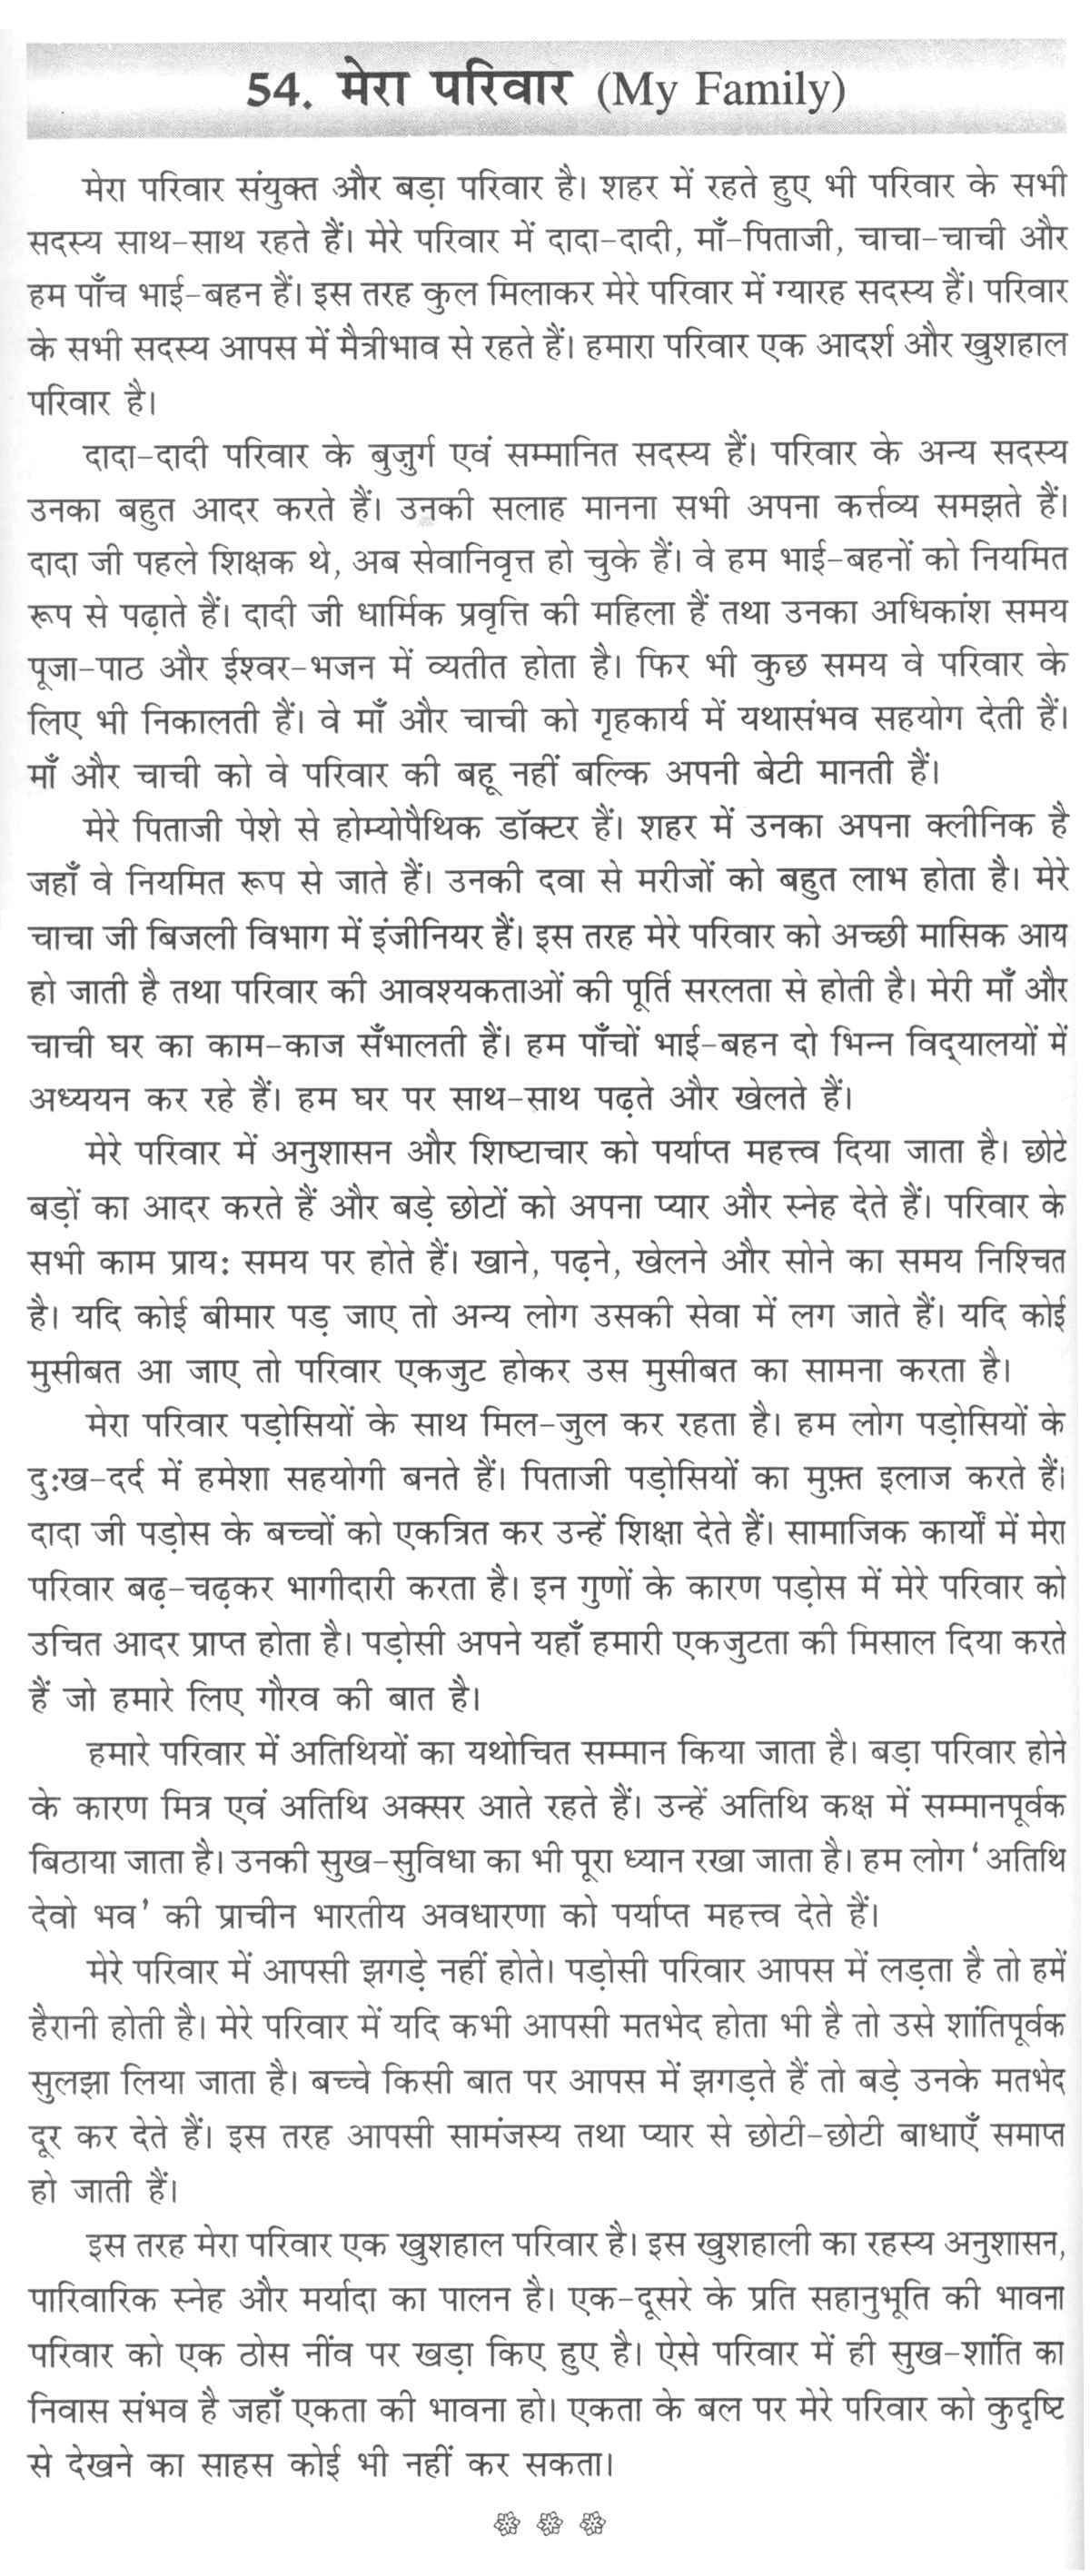 my grandmother essay in hindi